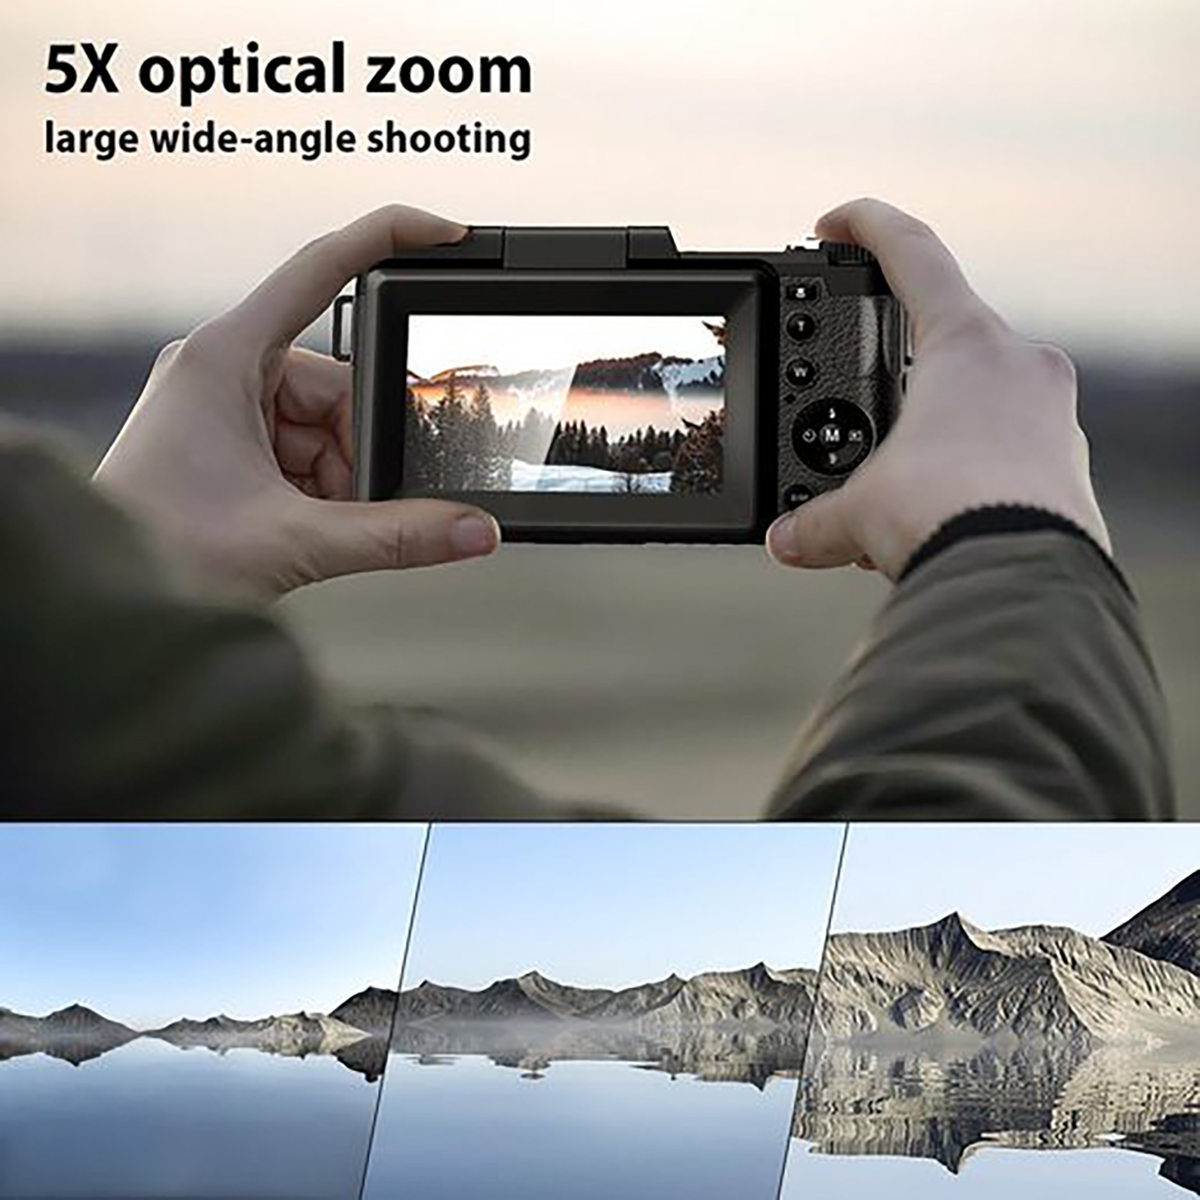 opt. mit Digitalkamera Sony opt. 5x Zoom- CMOS-Sensor, Kompaktkamera LINGDA Schwarz, Zoom Mikro-SLR